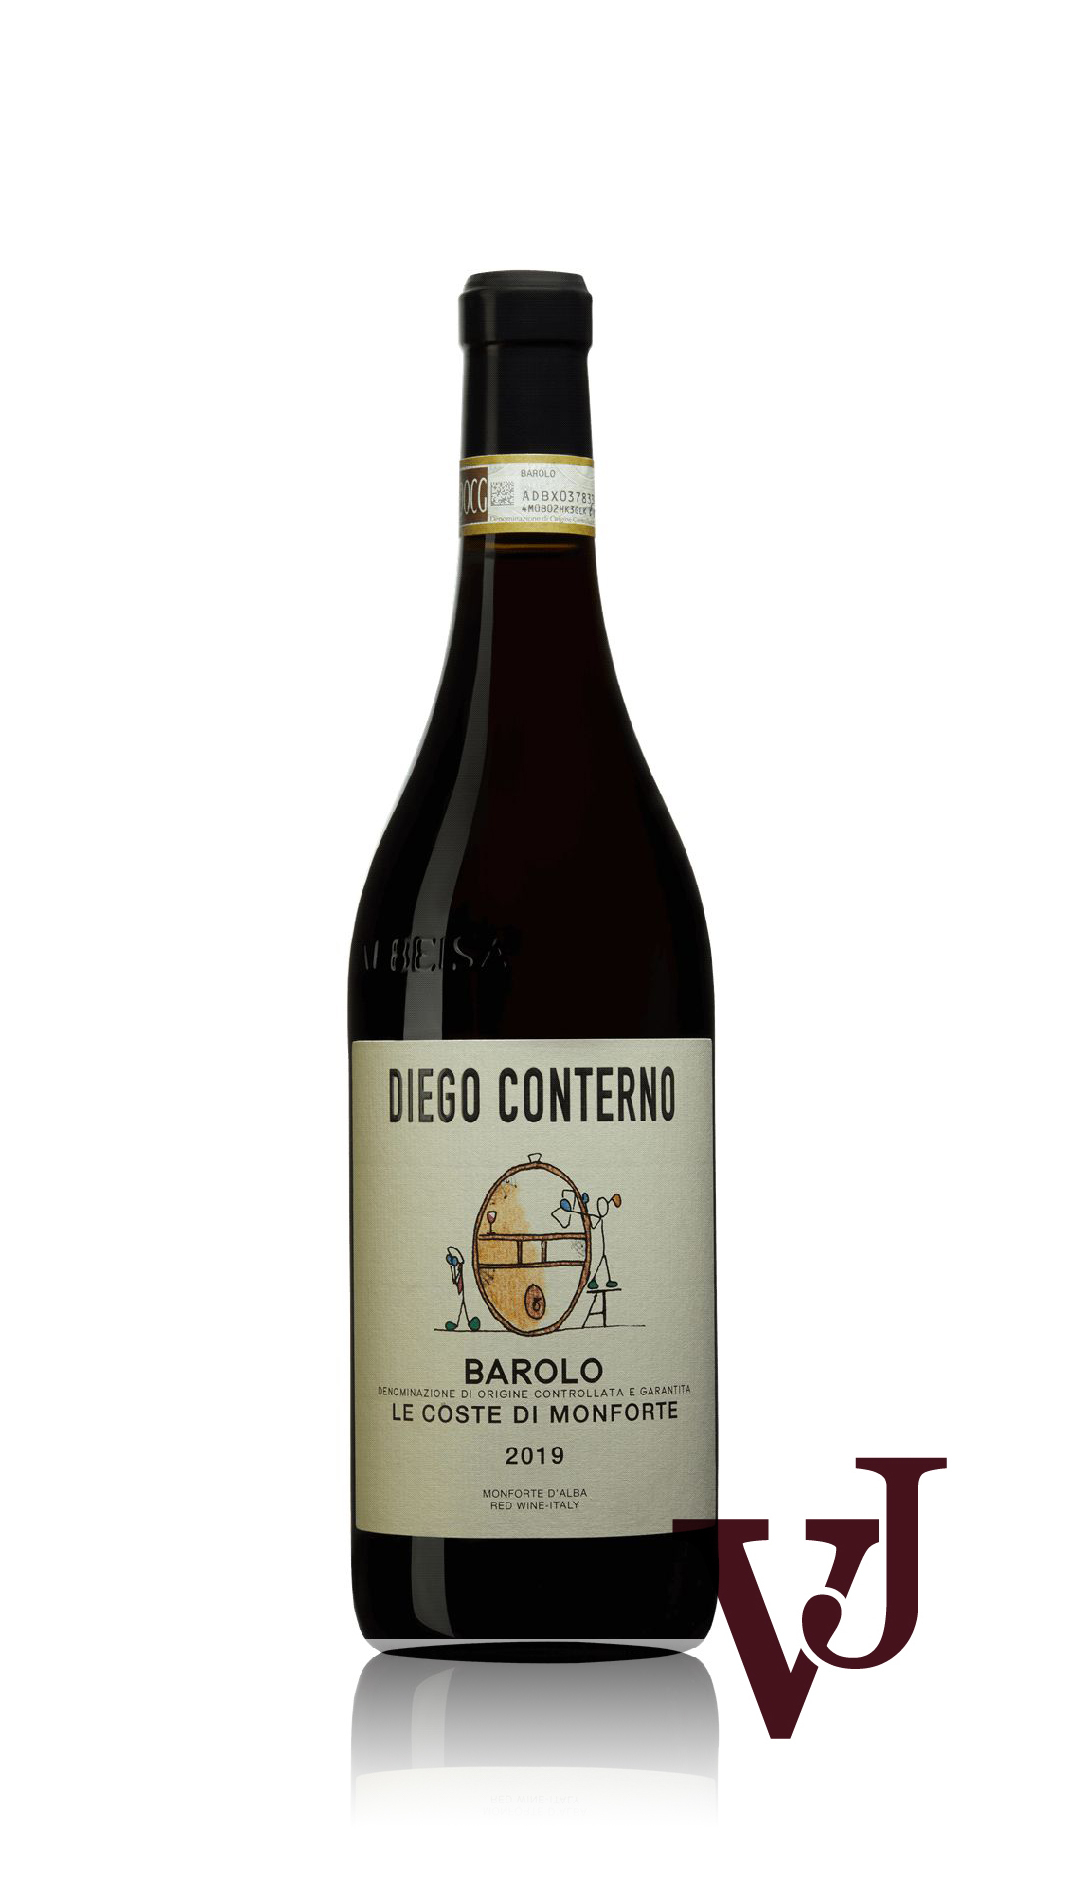 Rött vin - Barolo Le Coste di Monforte 2019 artikel nummer 9306901 från producenten Diego Conterno från Italien